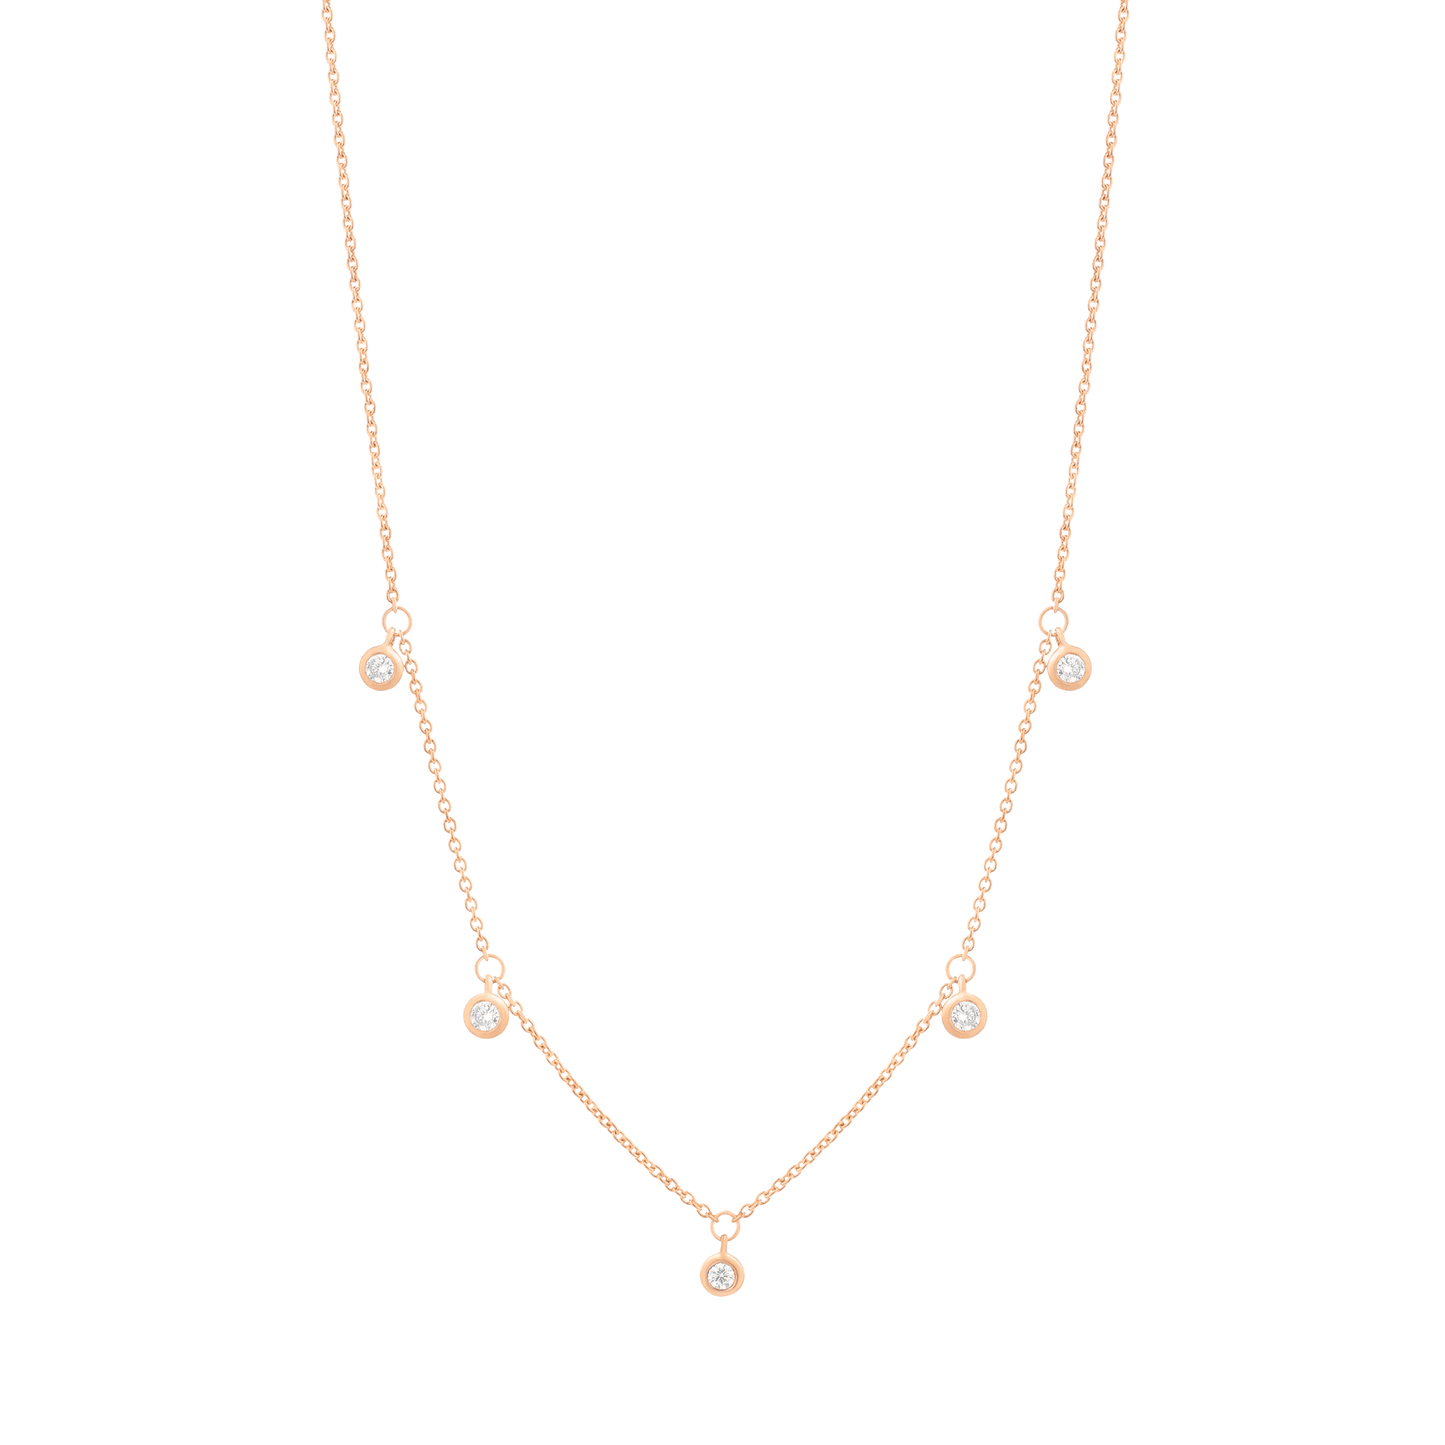 5 Diamonds Bezel Necklace - 14K White Gold Necklaces magal-dev 